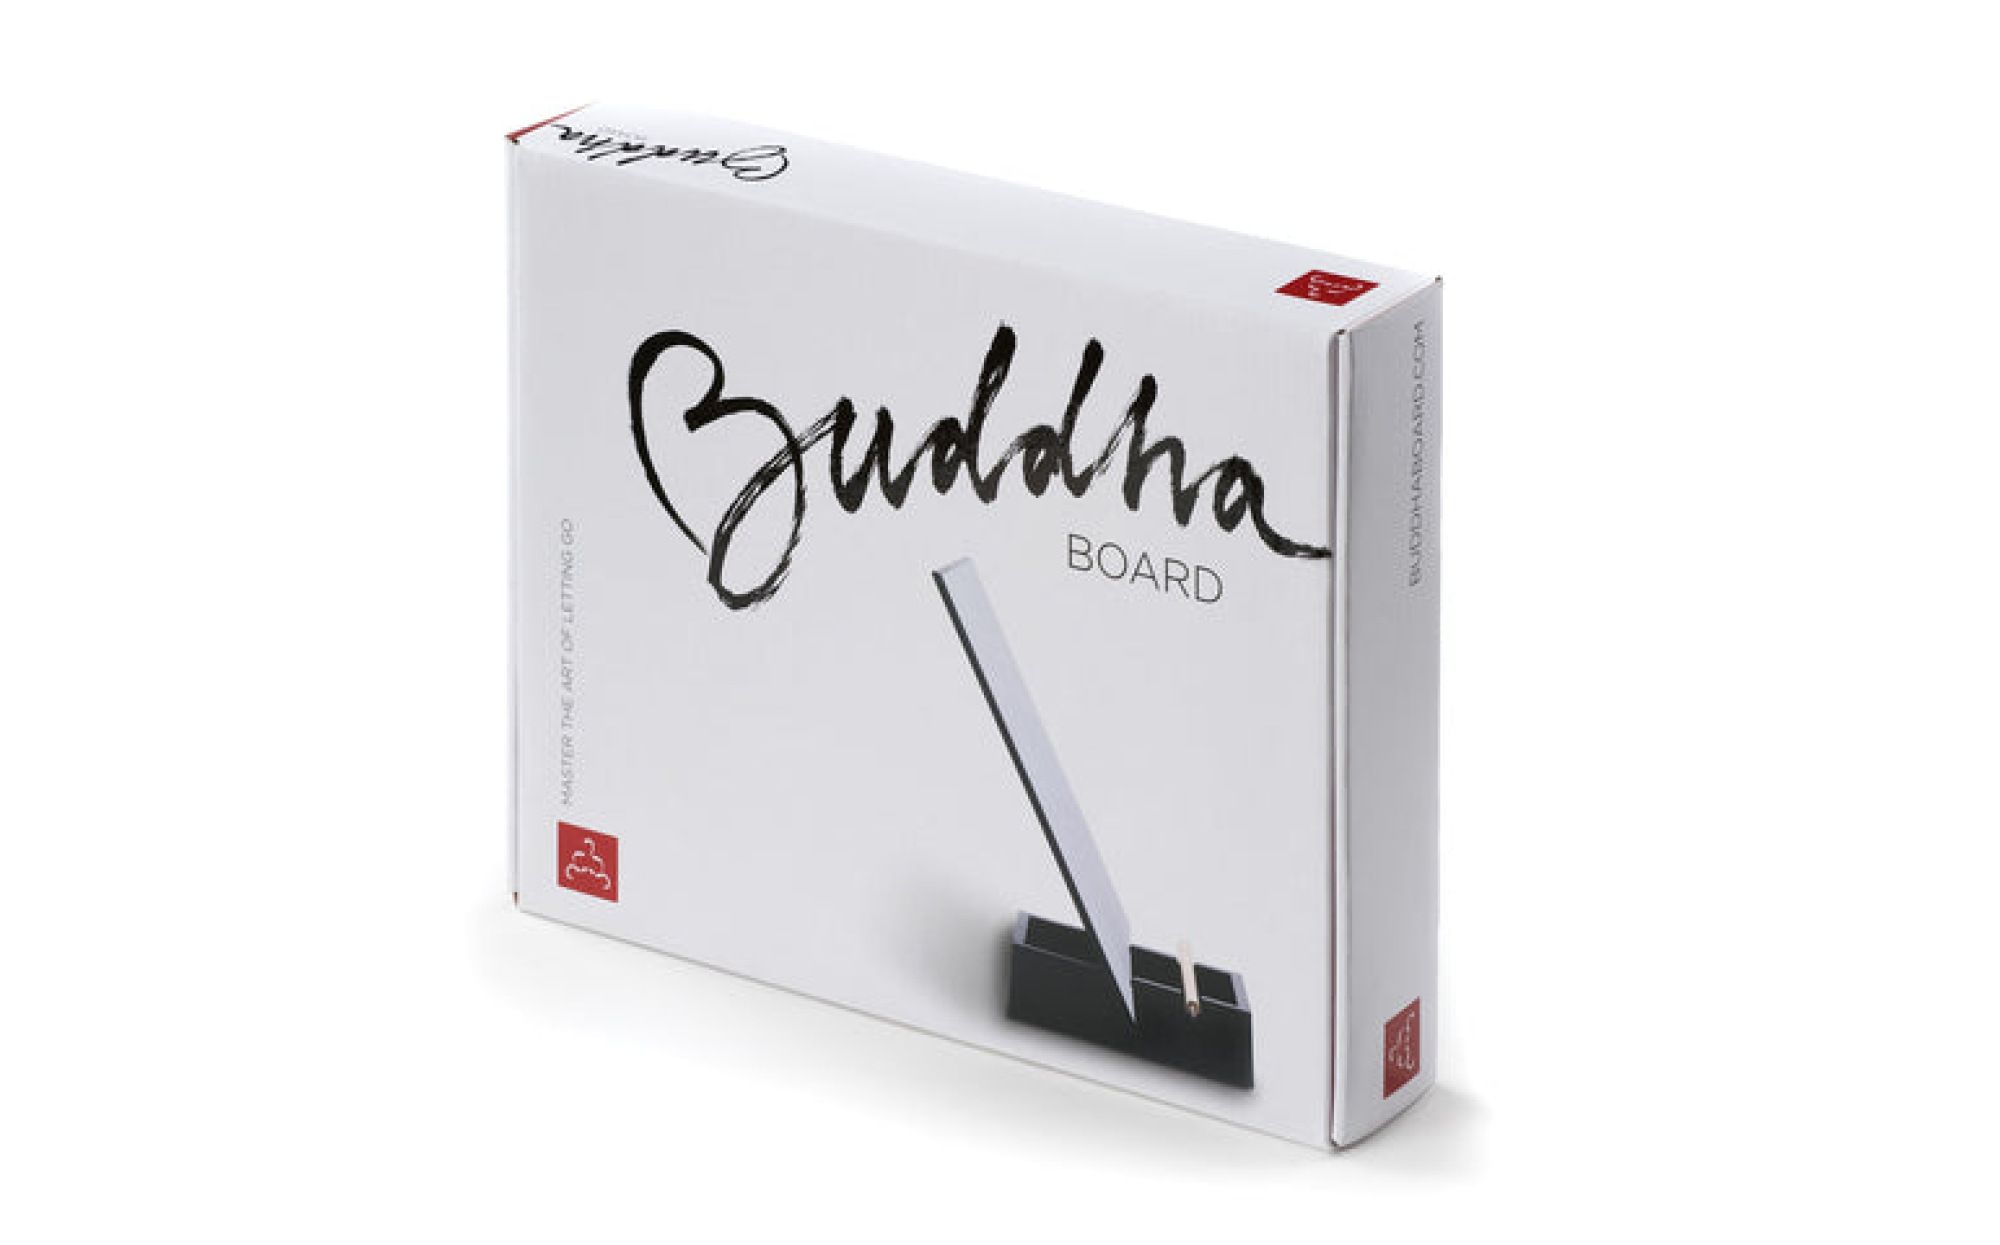 Buddha Board - Original – Art Therapy